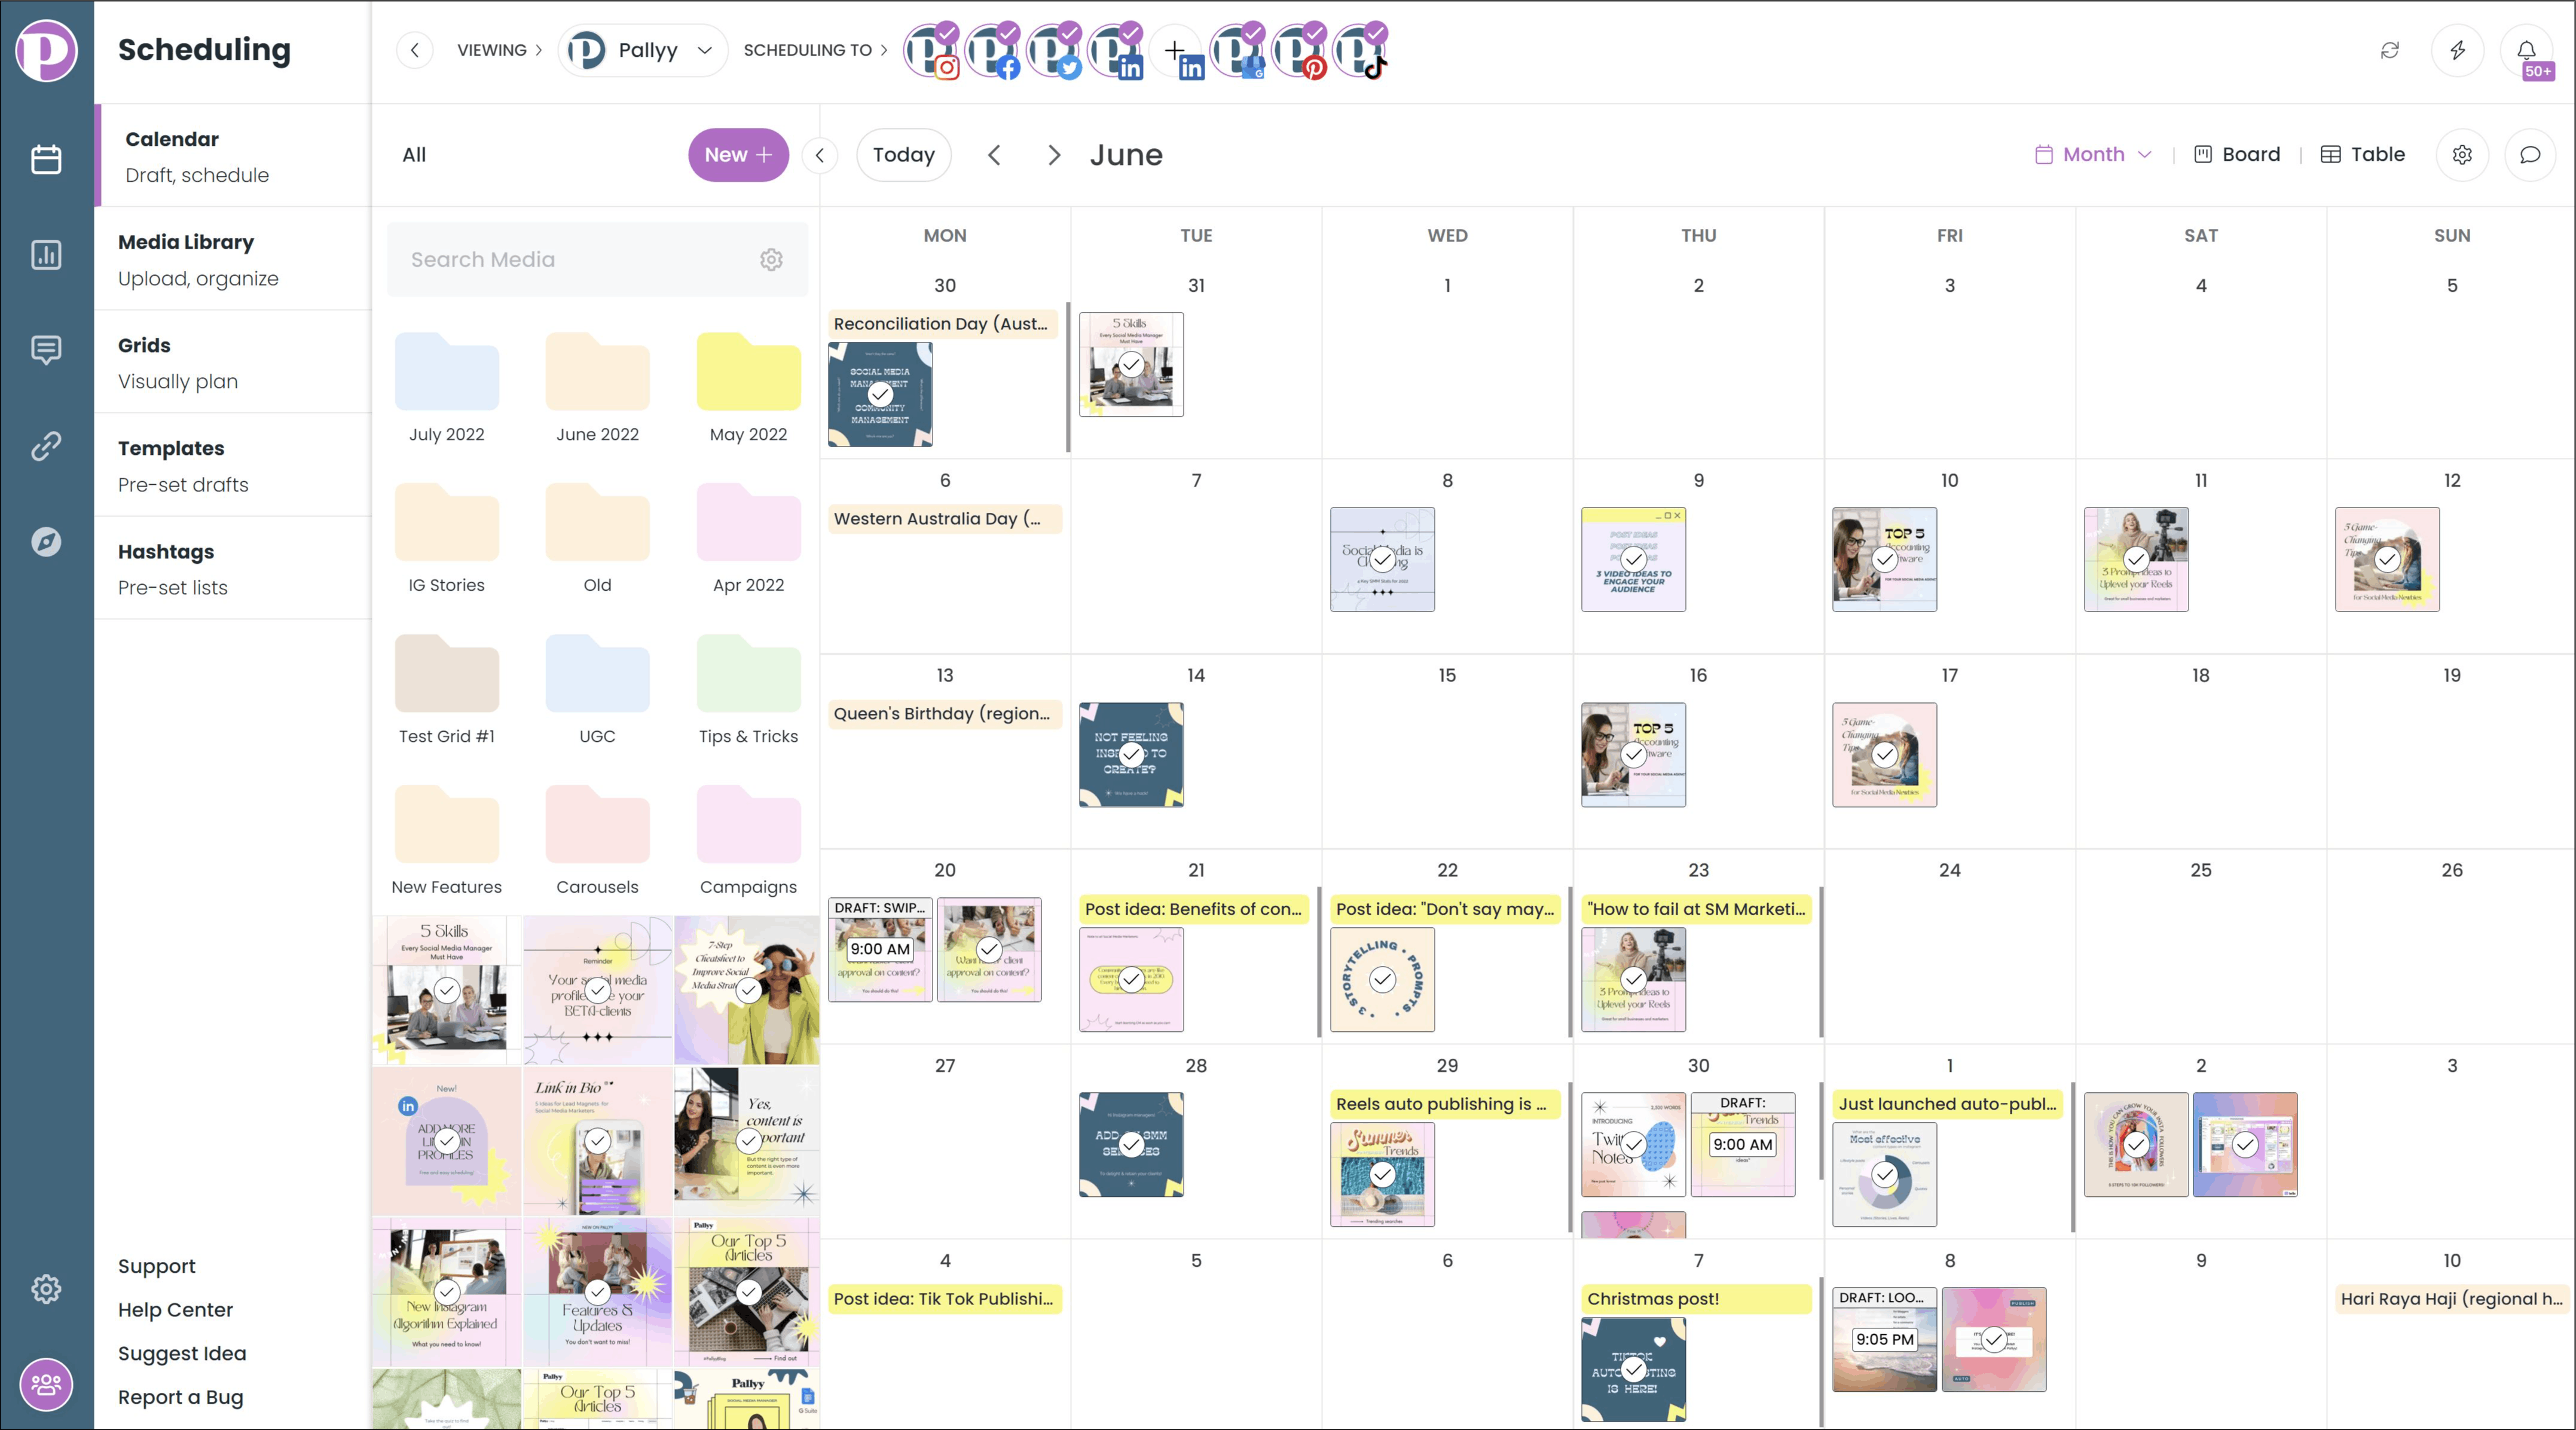 Scheduling Calendar View